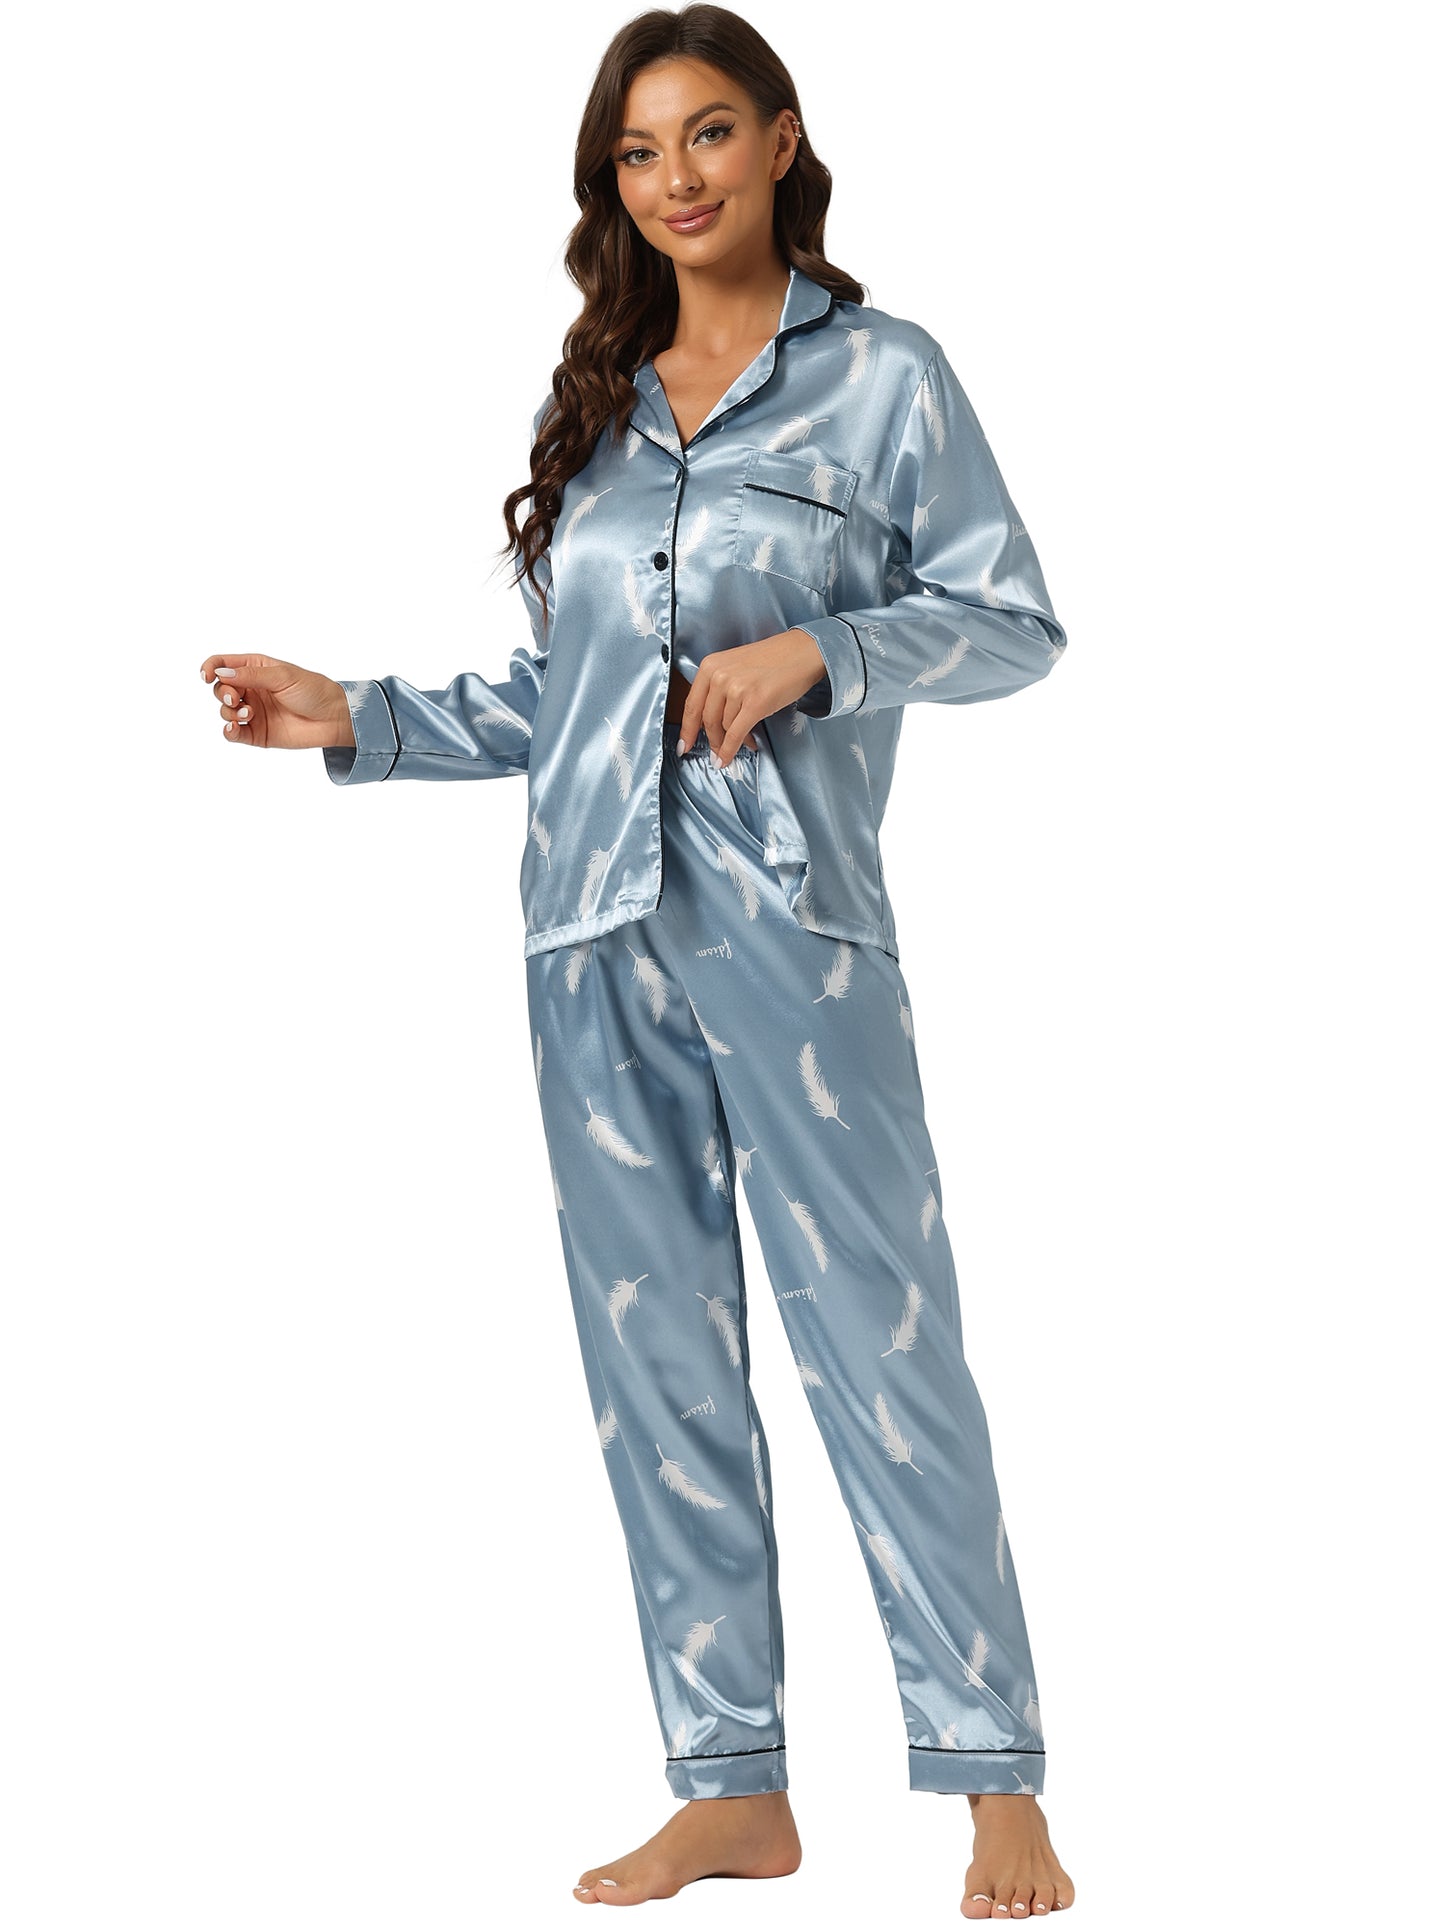 cheibear Pajama Sleep Shirt Nightwear Sleepwear Lounge Satin Pj Sets Light Blue